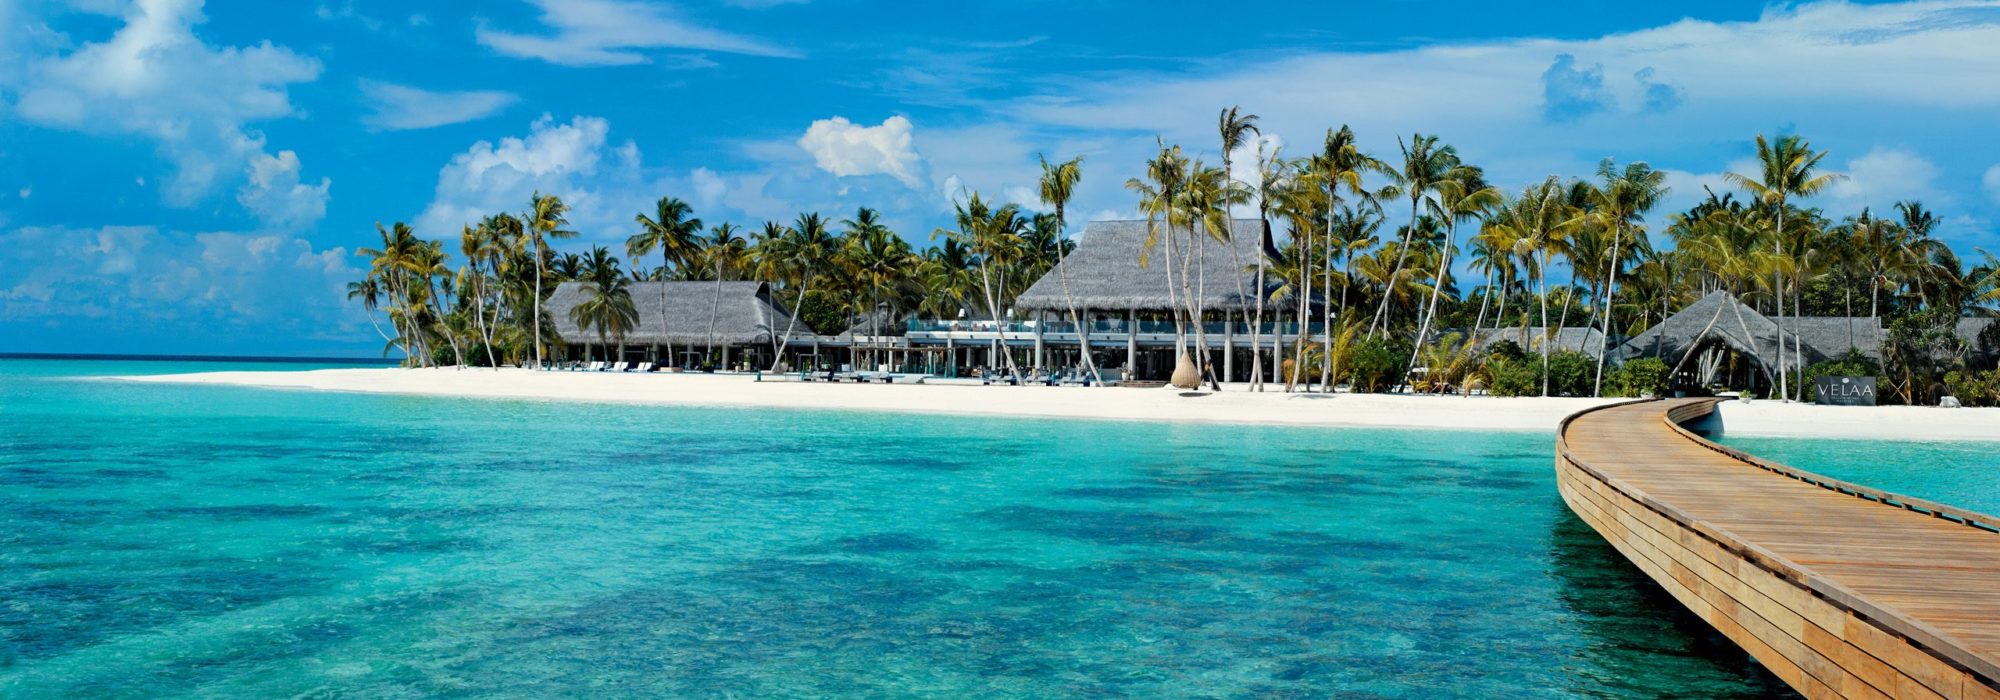 Maldives travel agents packages deals